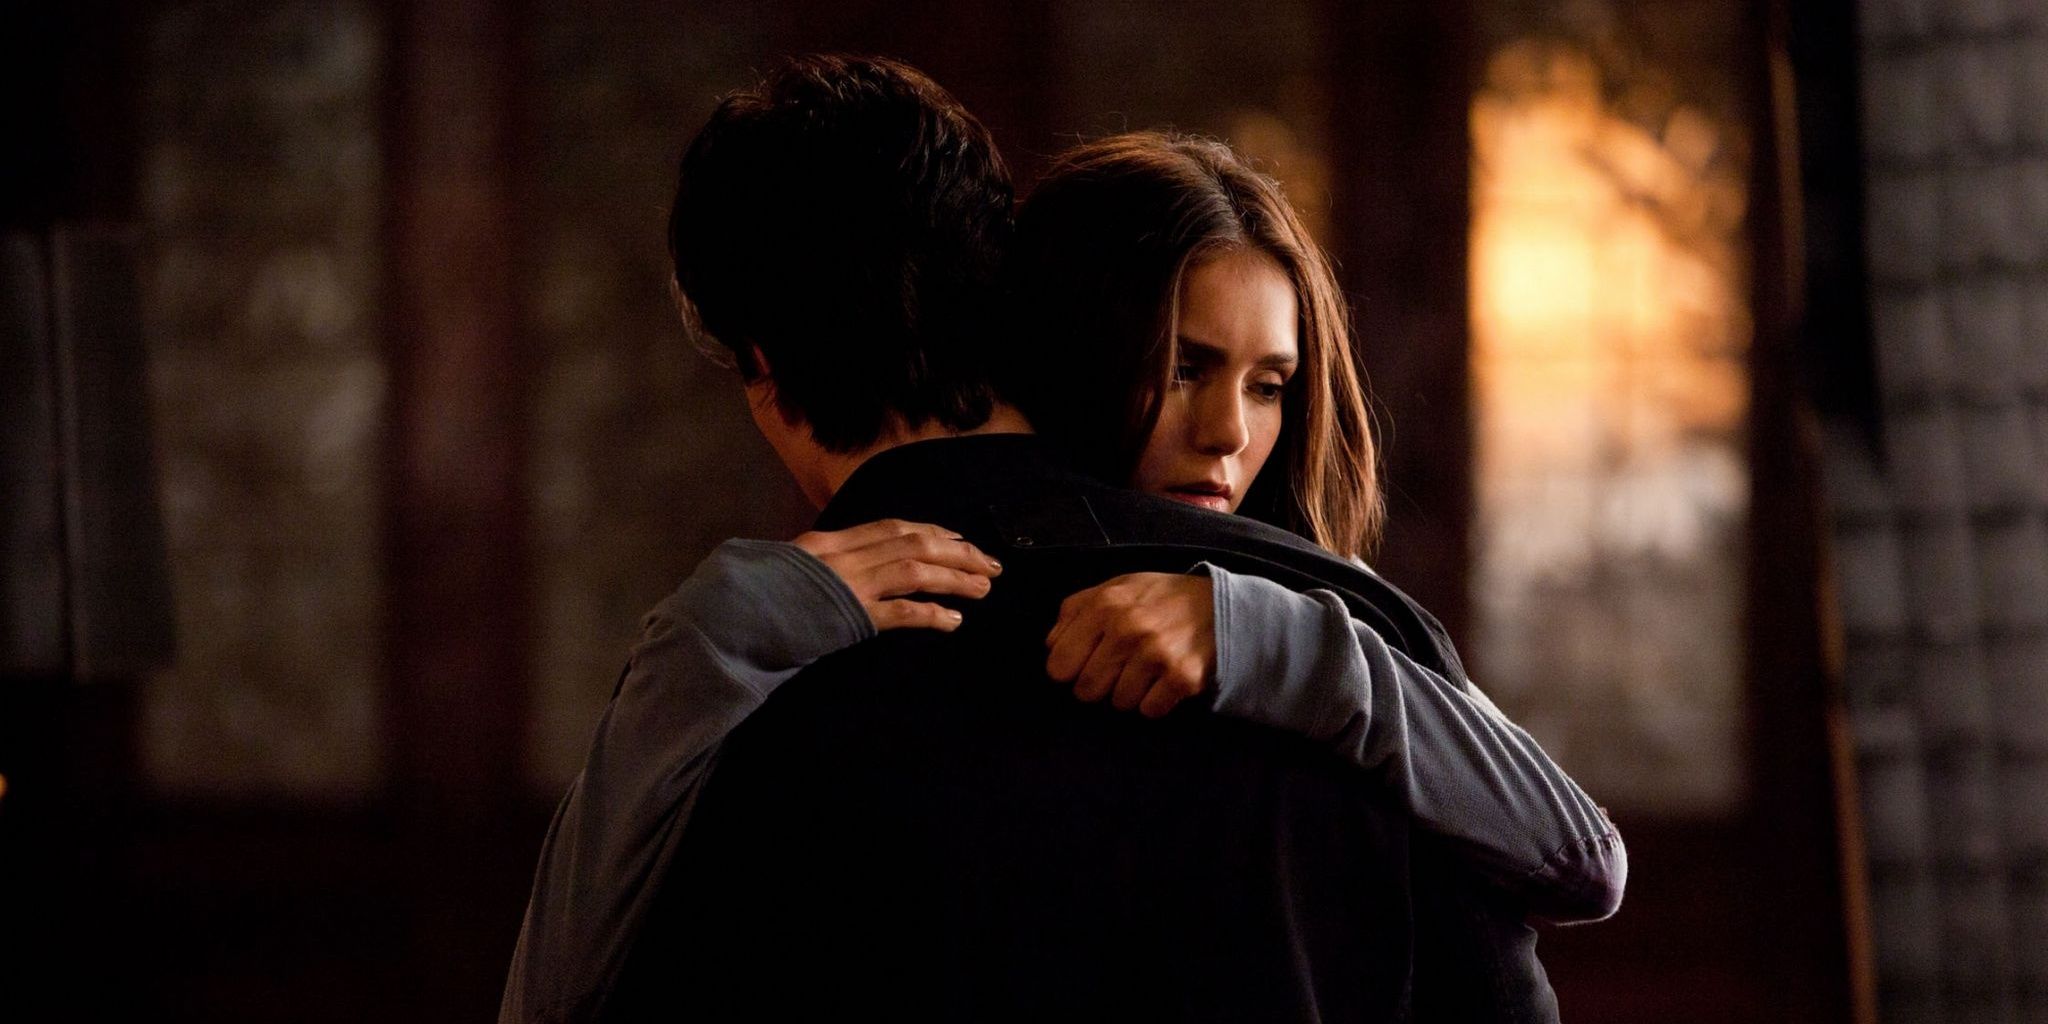 Elena hugs Damon in The Vampire Diaries